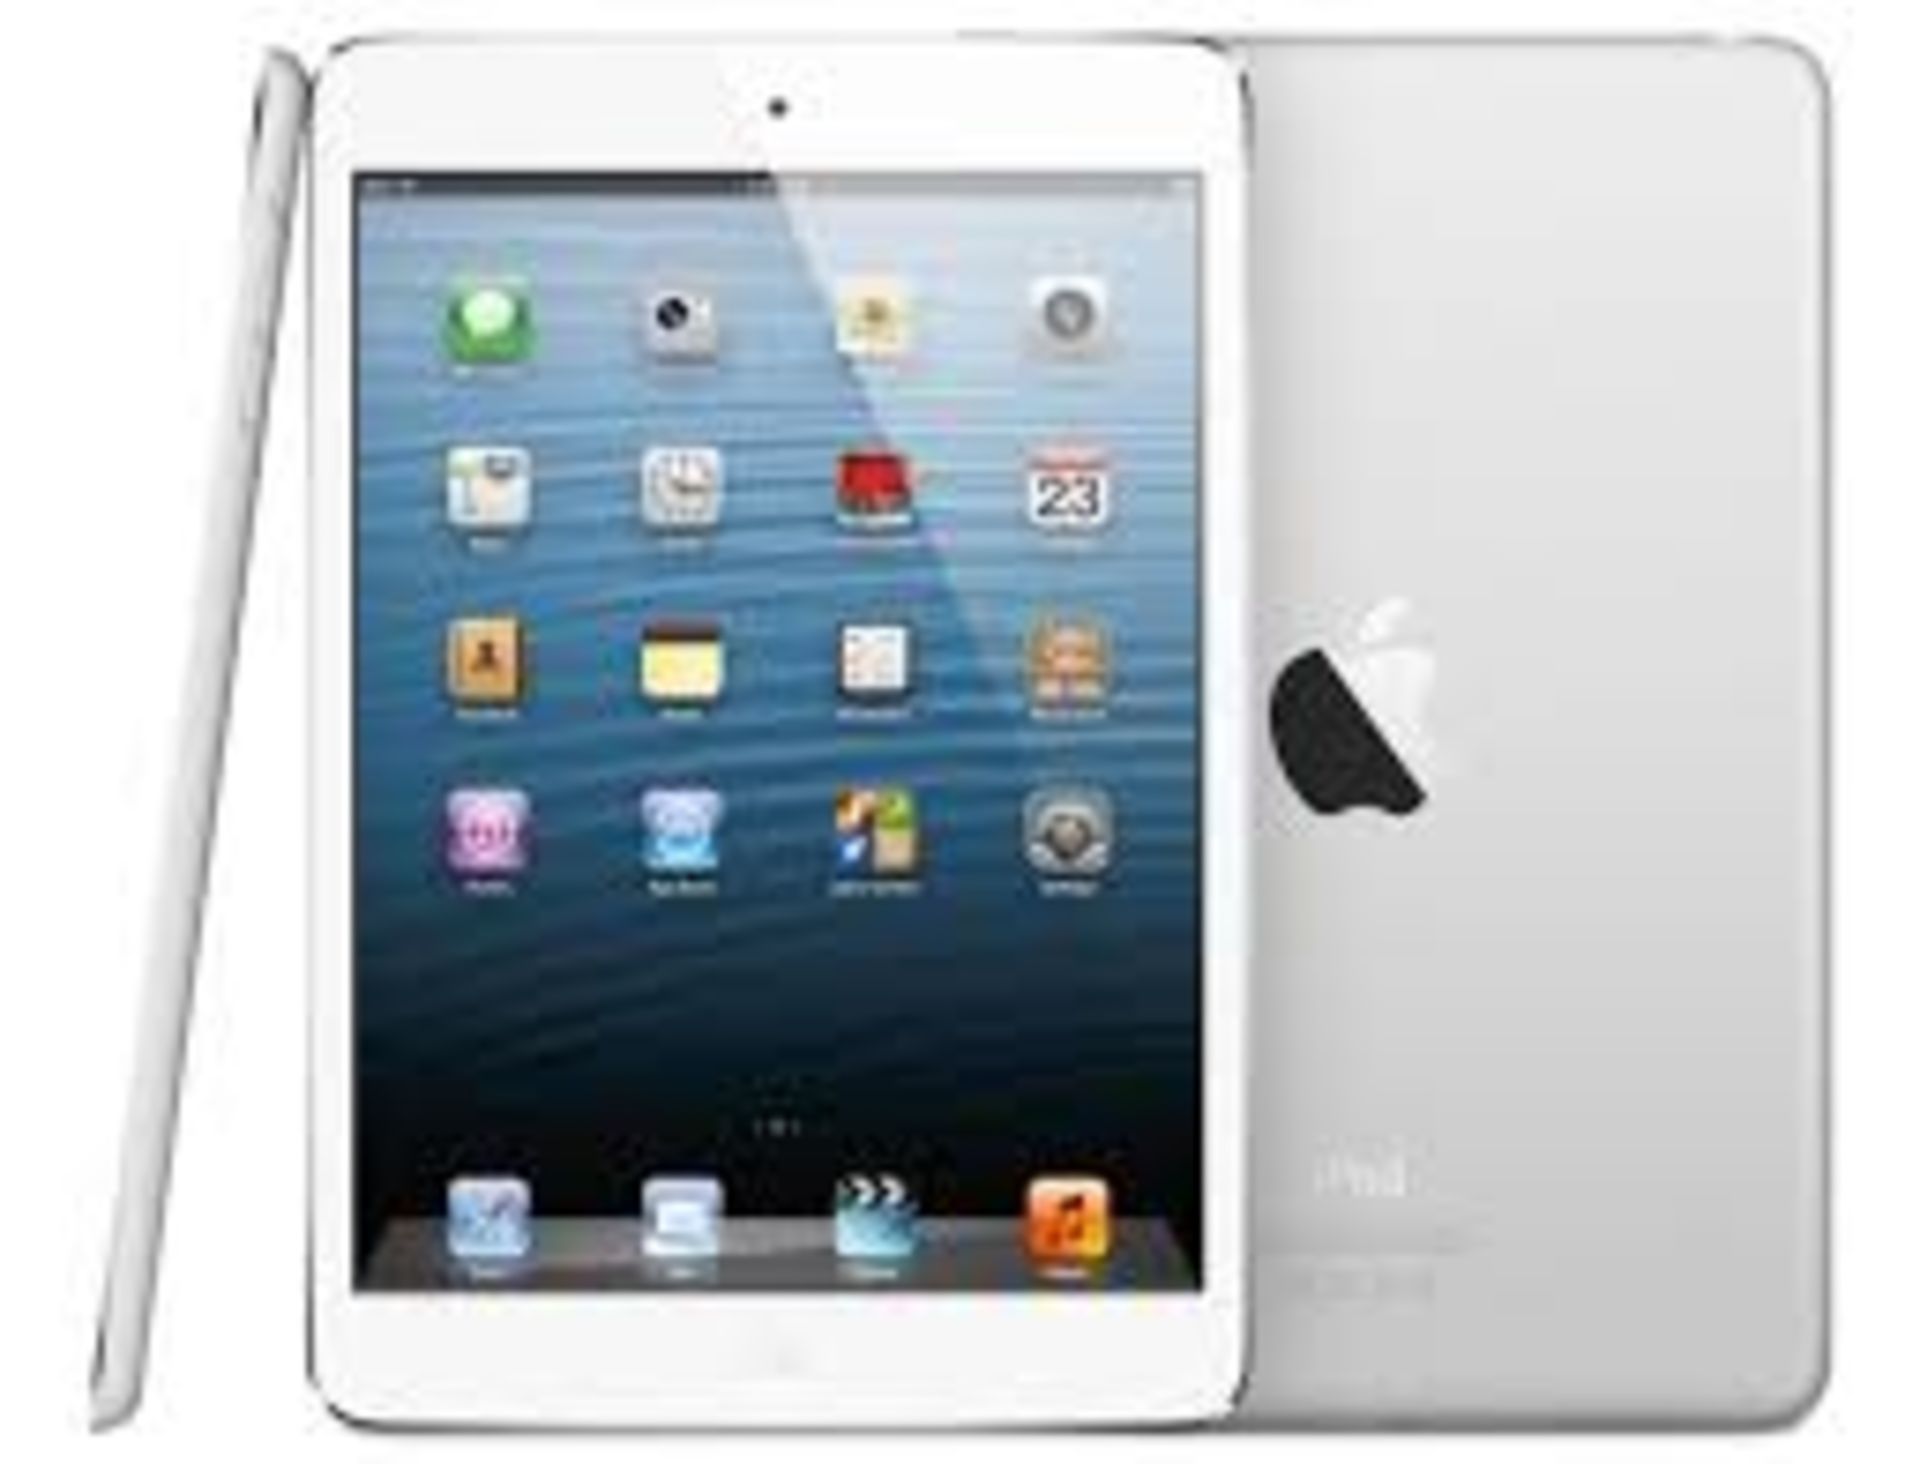 V Grade A Apple iPad Mini 16GB Wi-Fi White in Apple Box ISP - £209.95 X 2 YOUR BID PRICE TO BE